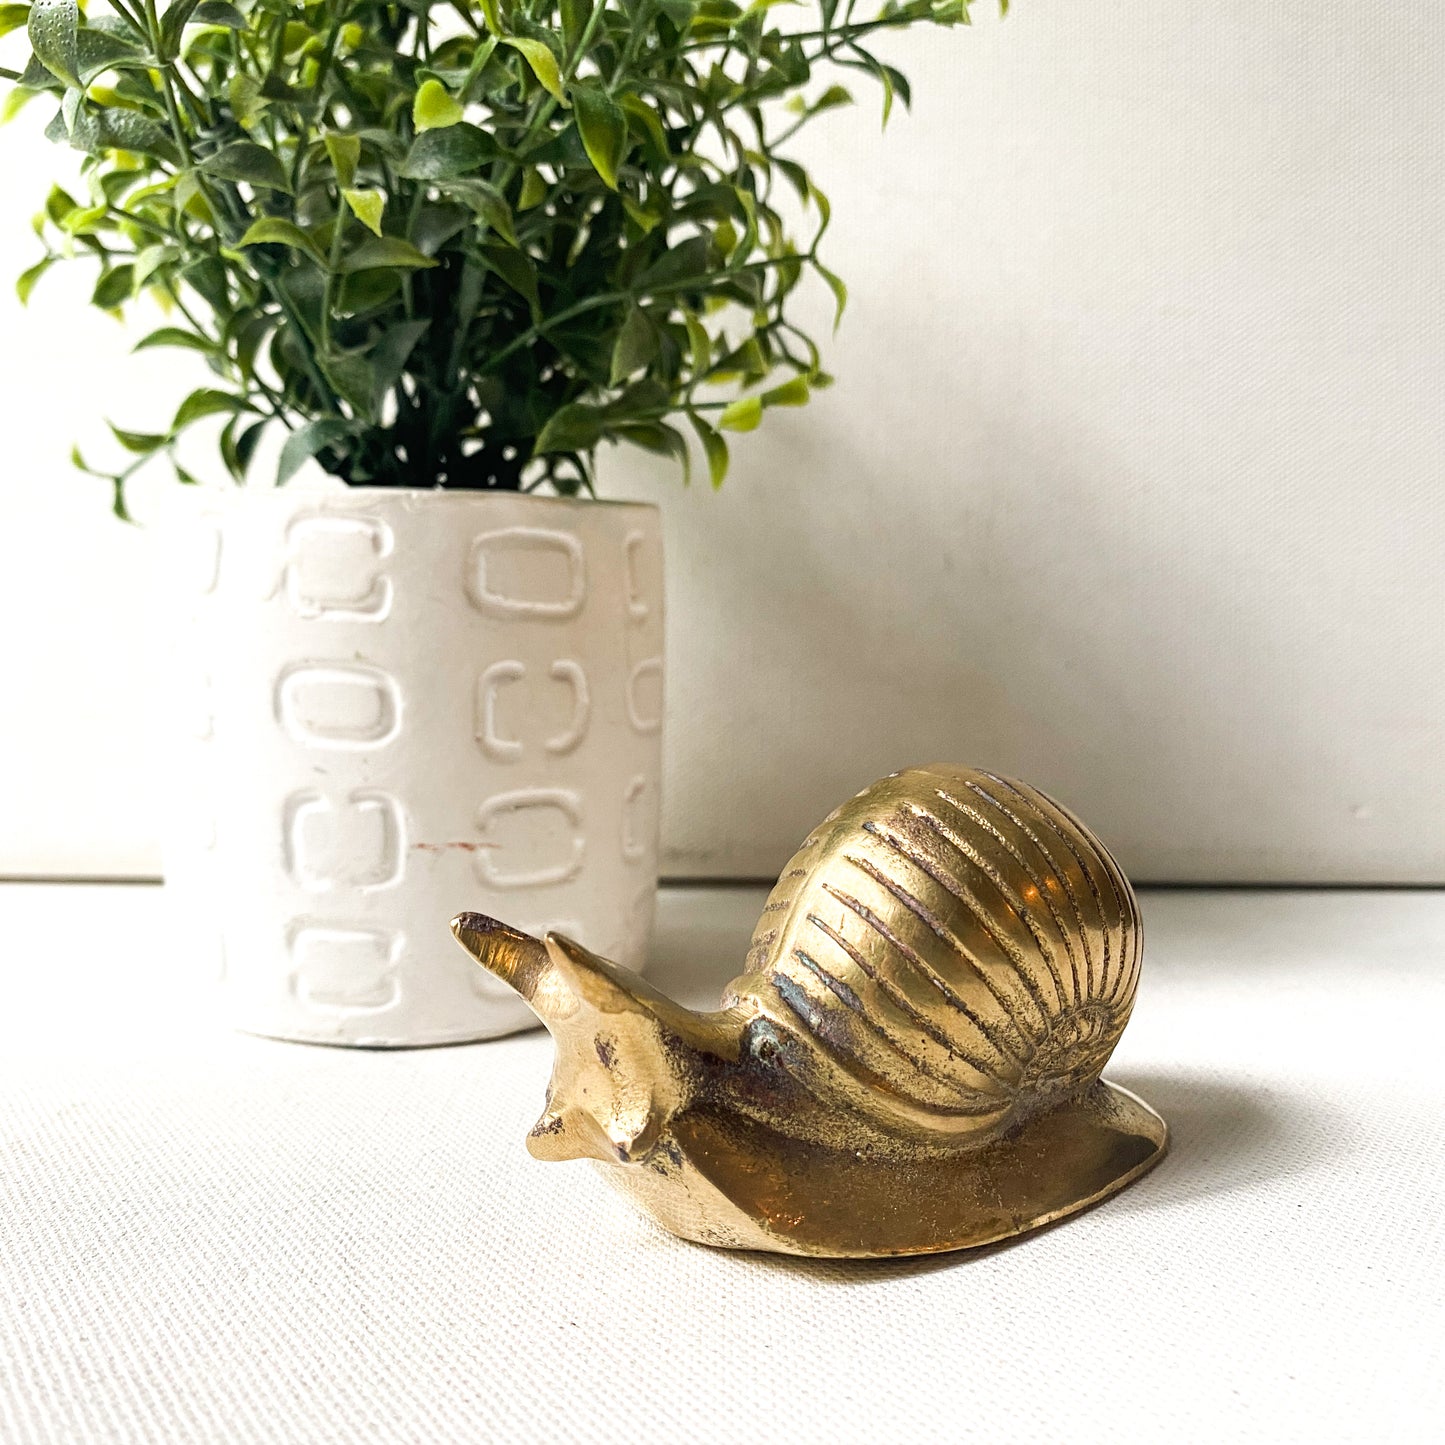 Small vintage brass snail figurine